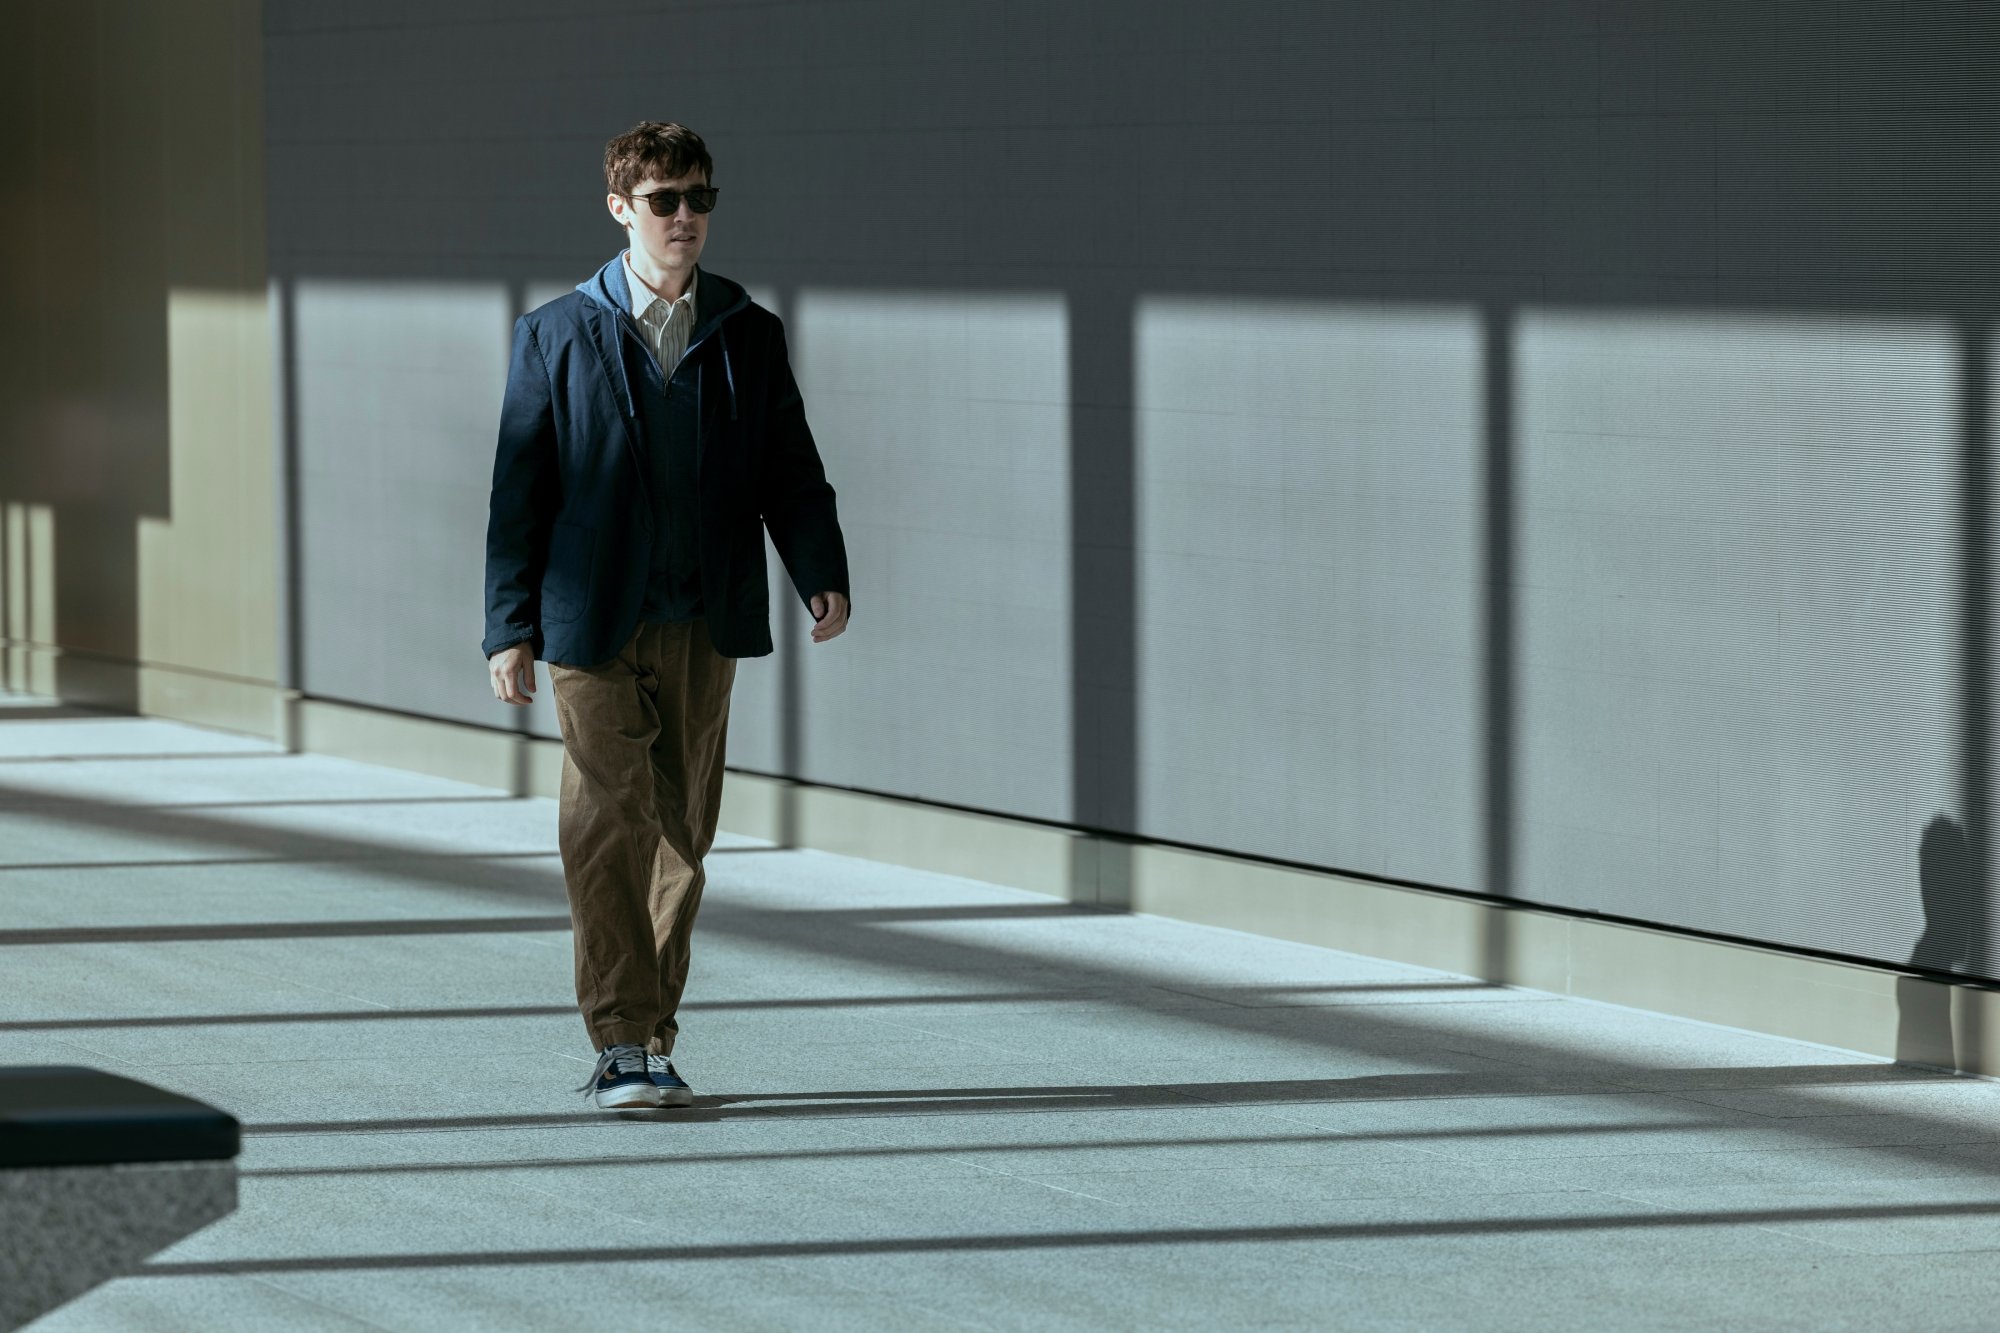 A man wearing sunglasses walks through a sparse building lobby.